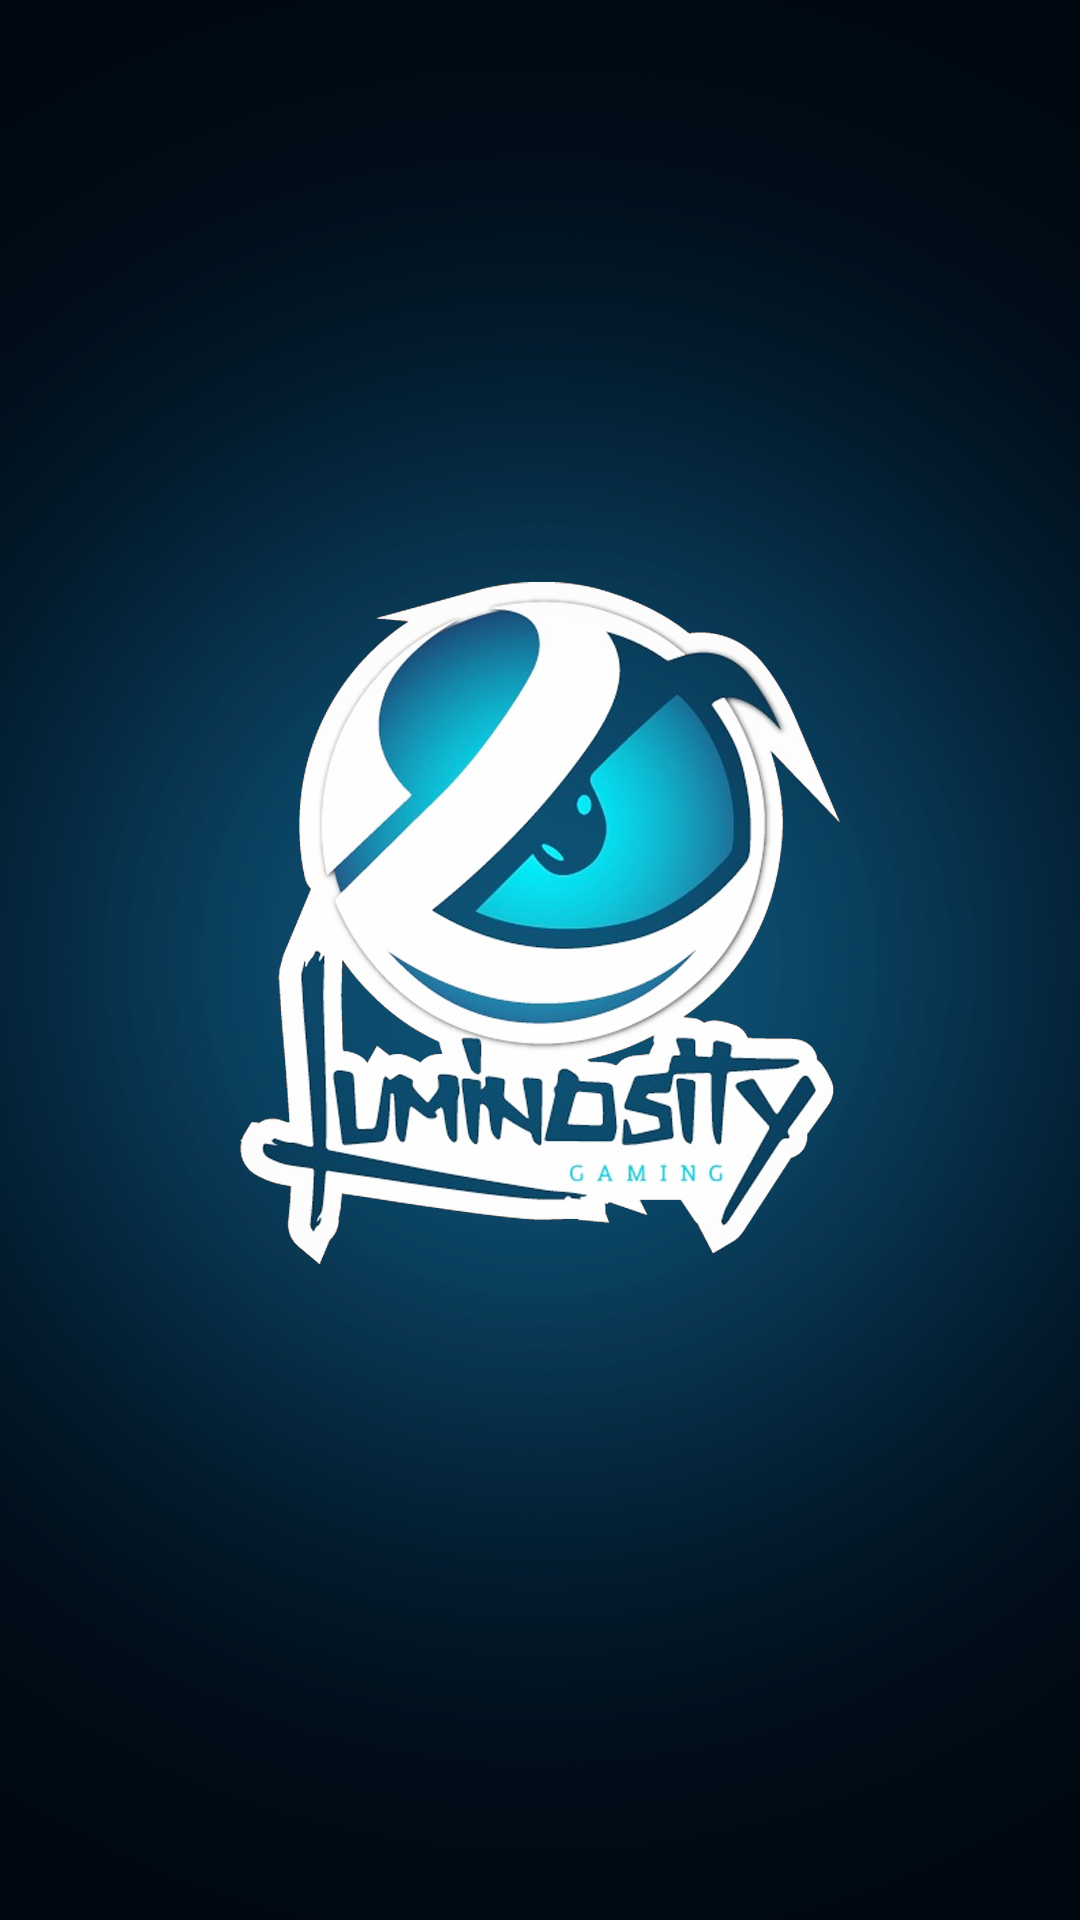 Luminosity Gaming Created By U Mossawi